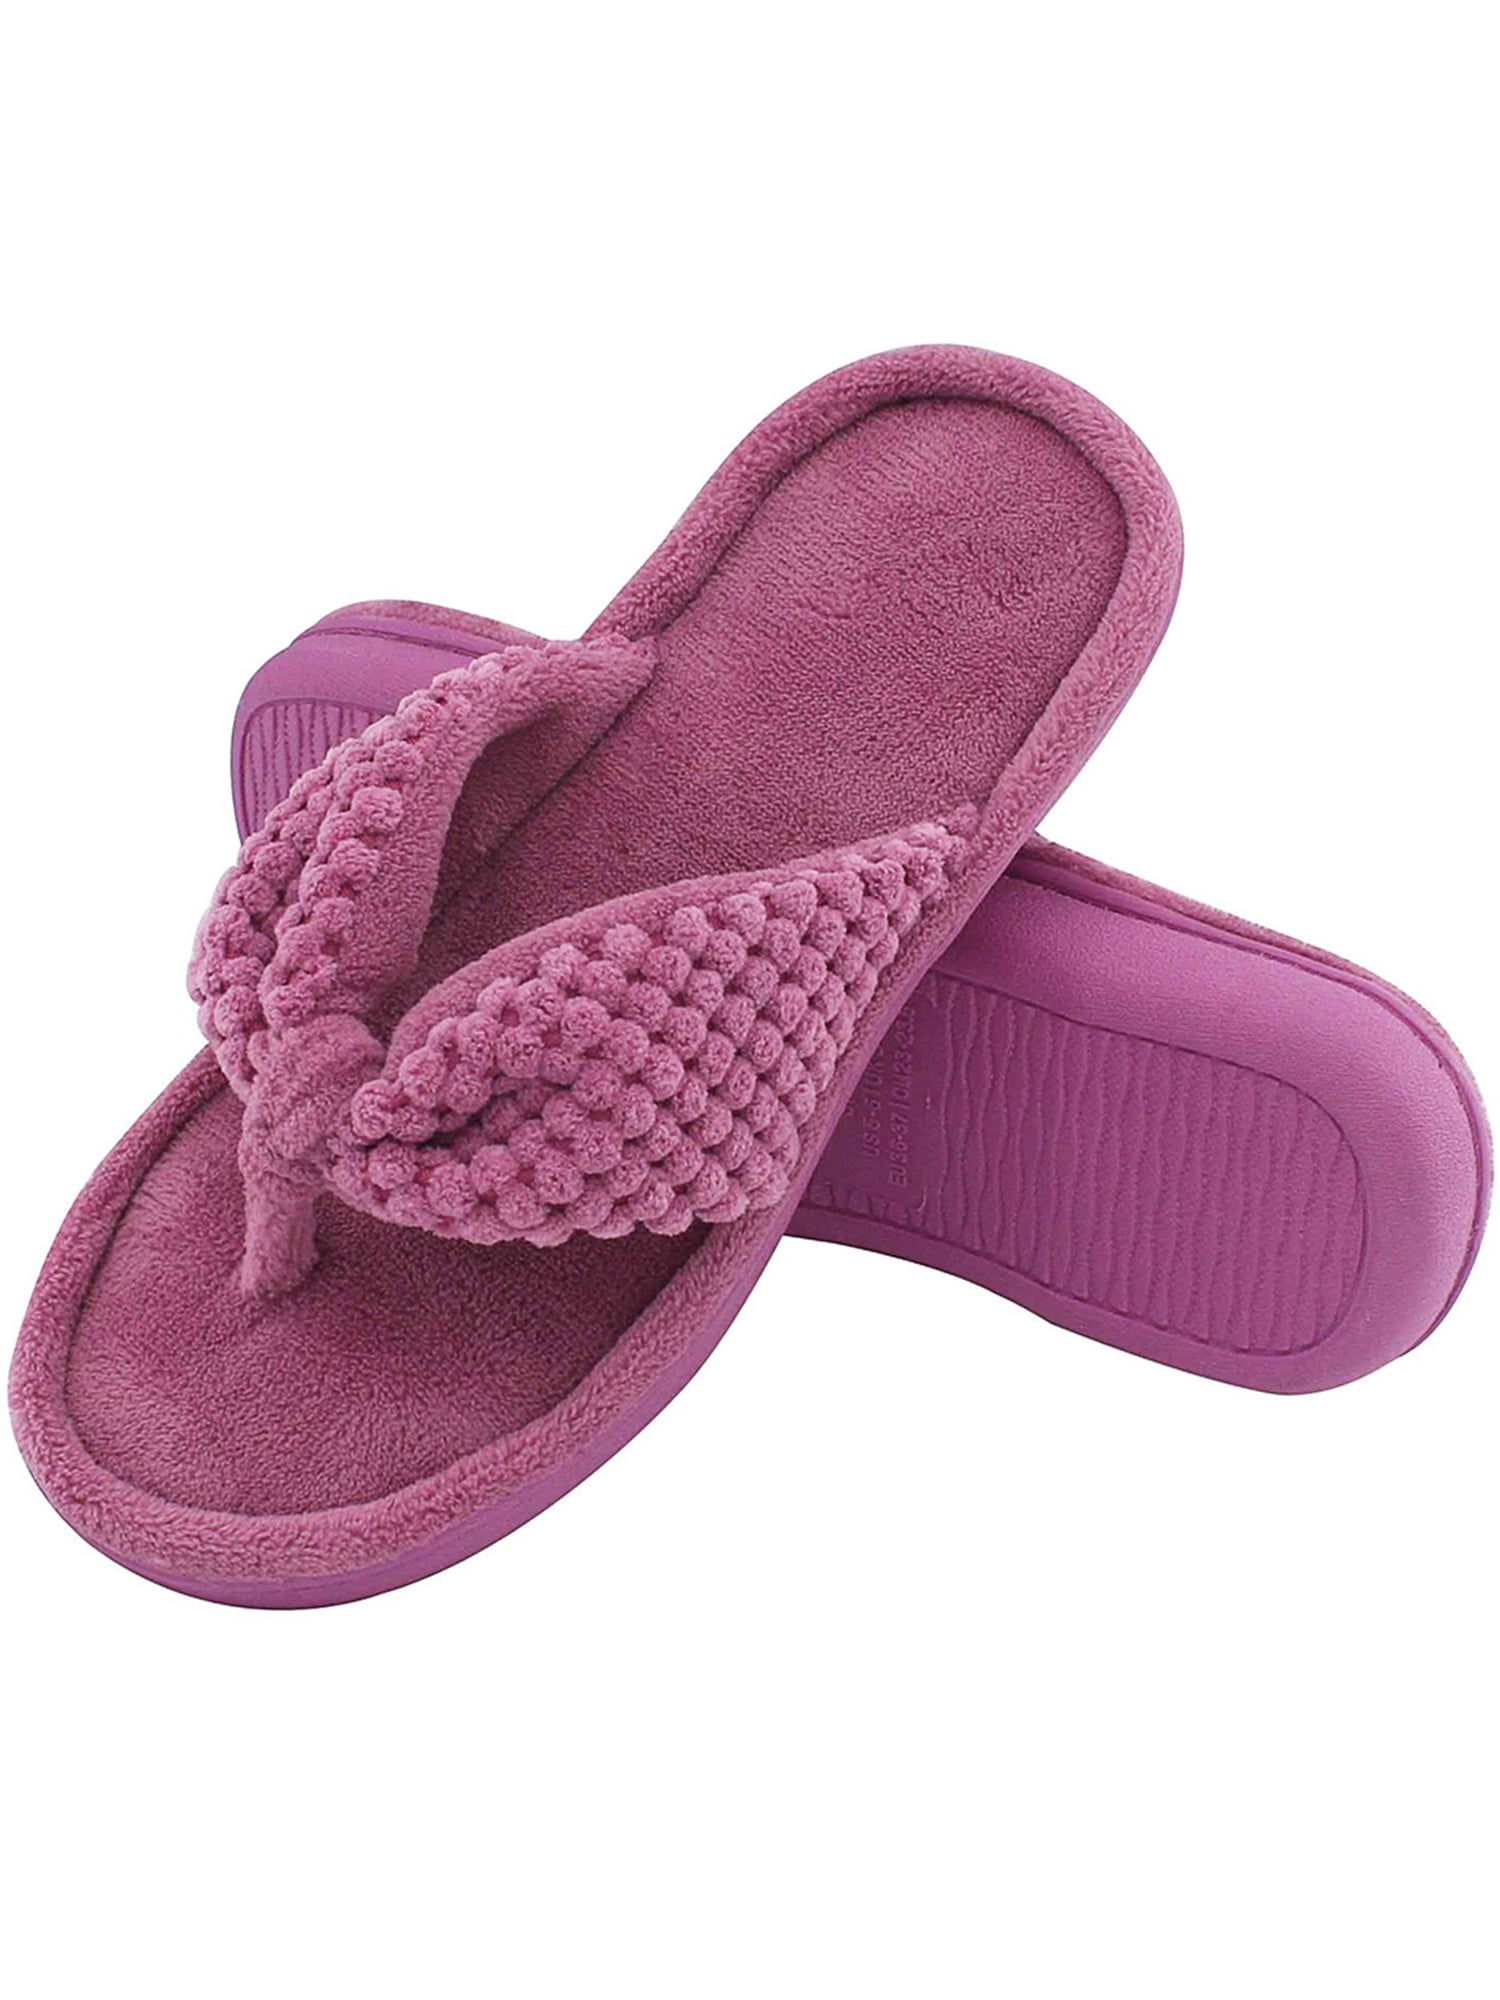 adjustable strap slippers